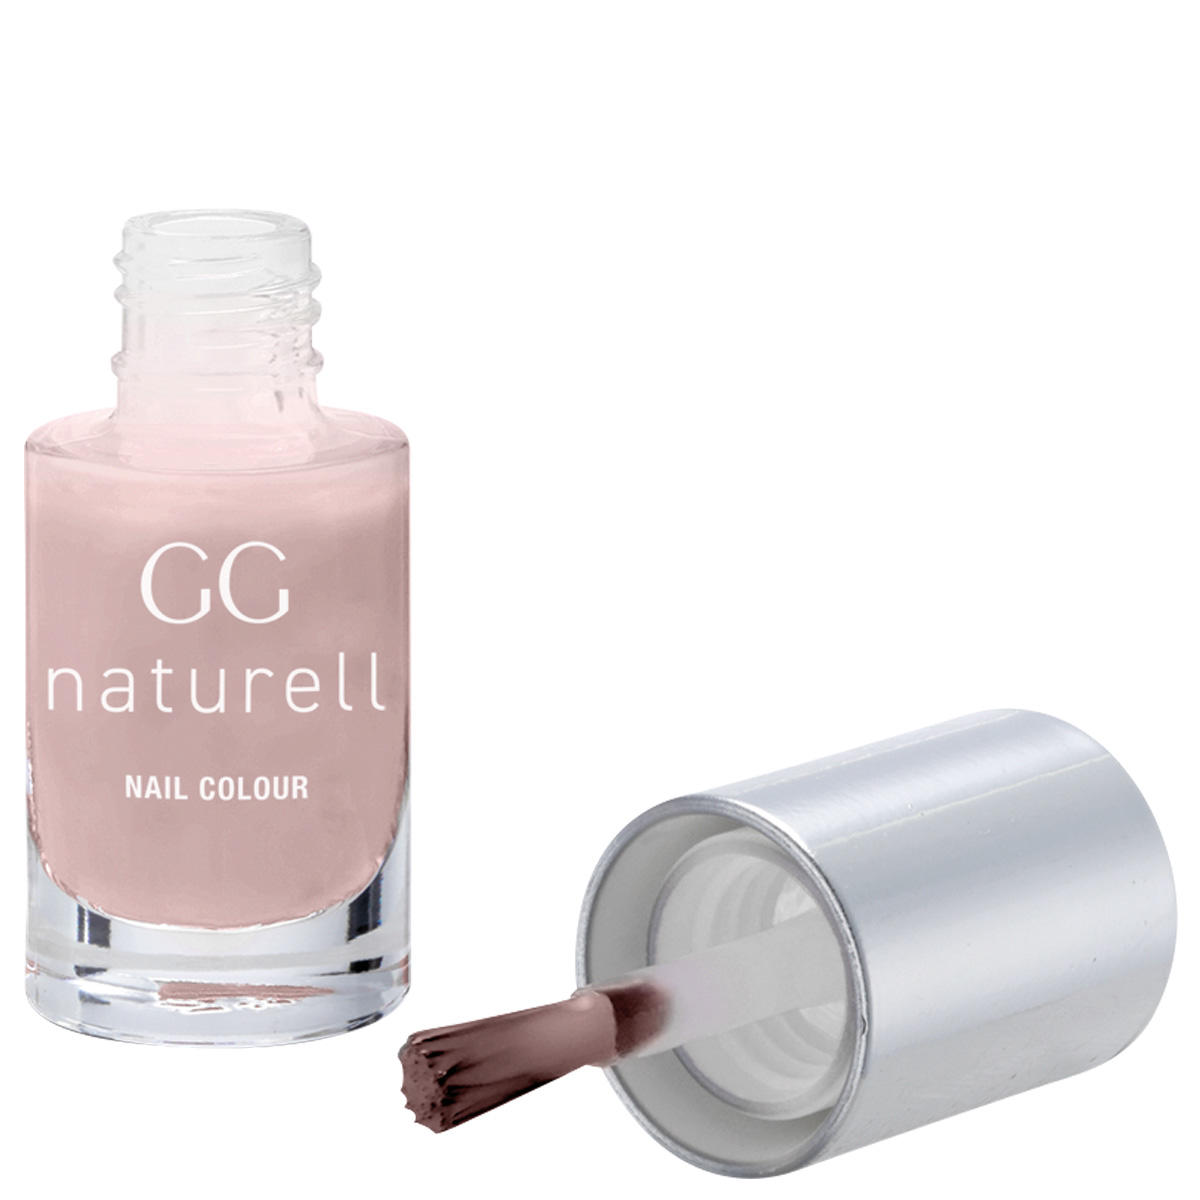 GERTRAUD GRUBER GG naturell Nail Colour 5 ml Magnolia